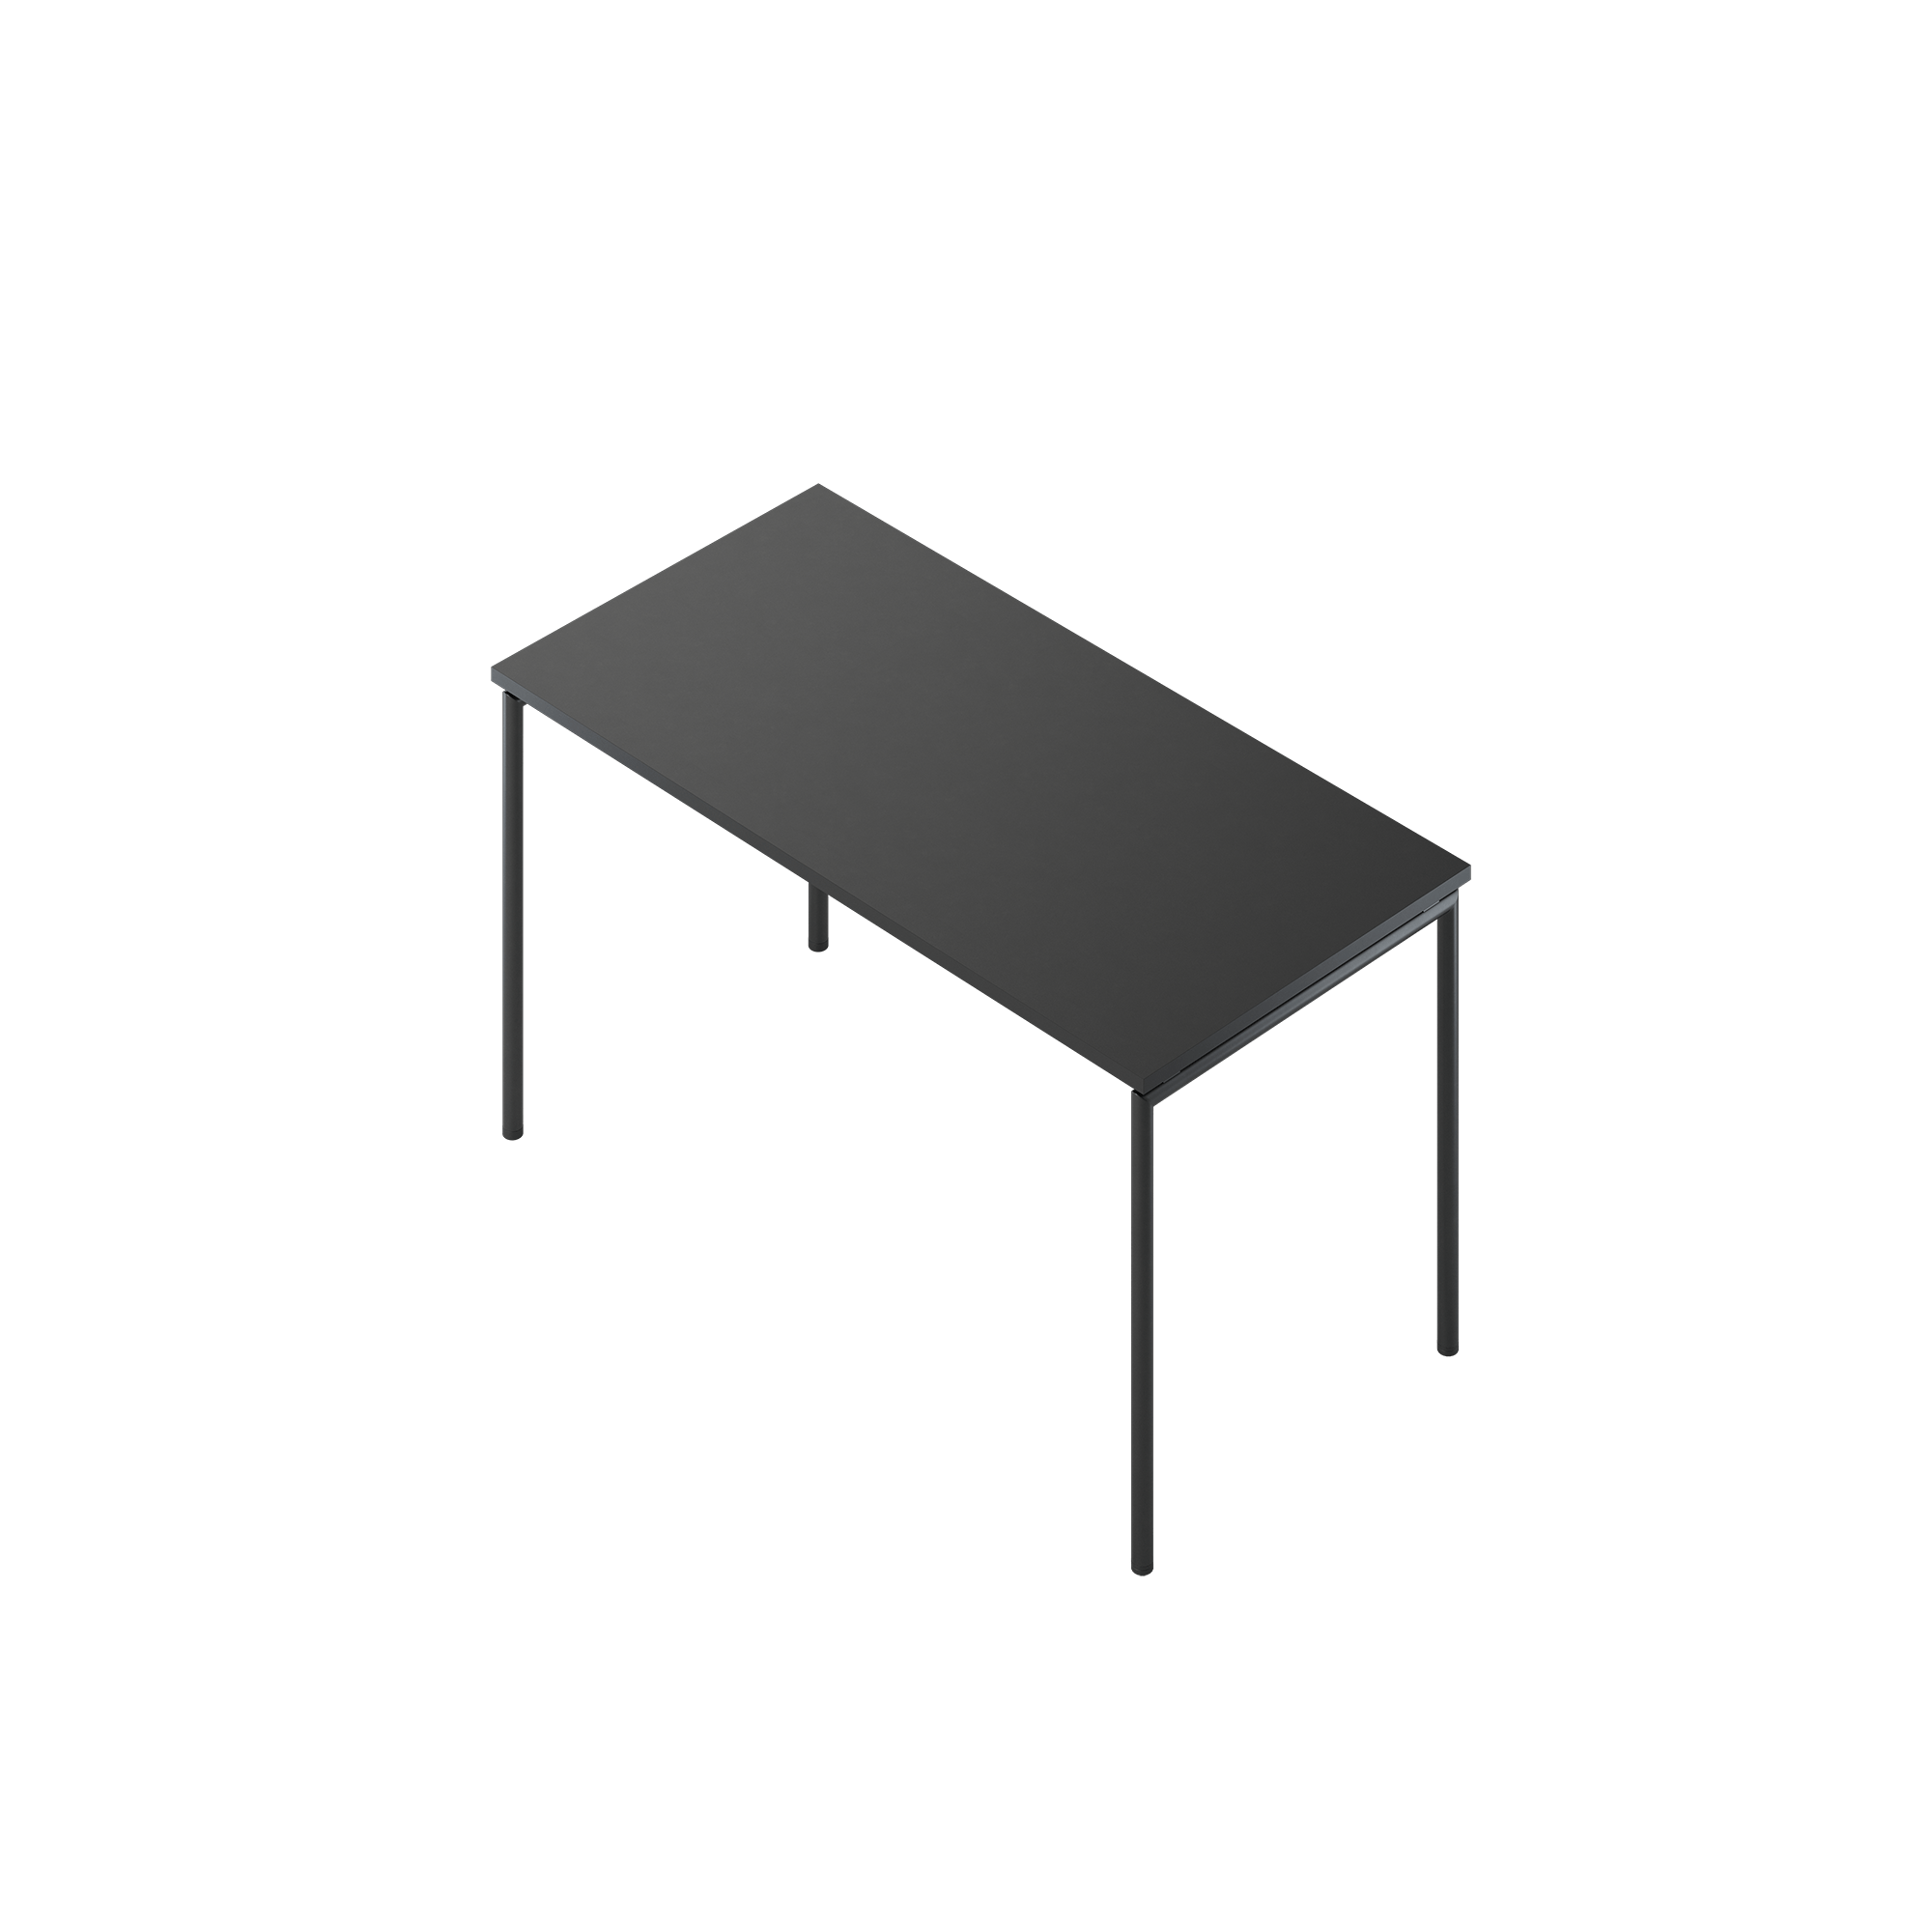 A black table